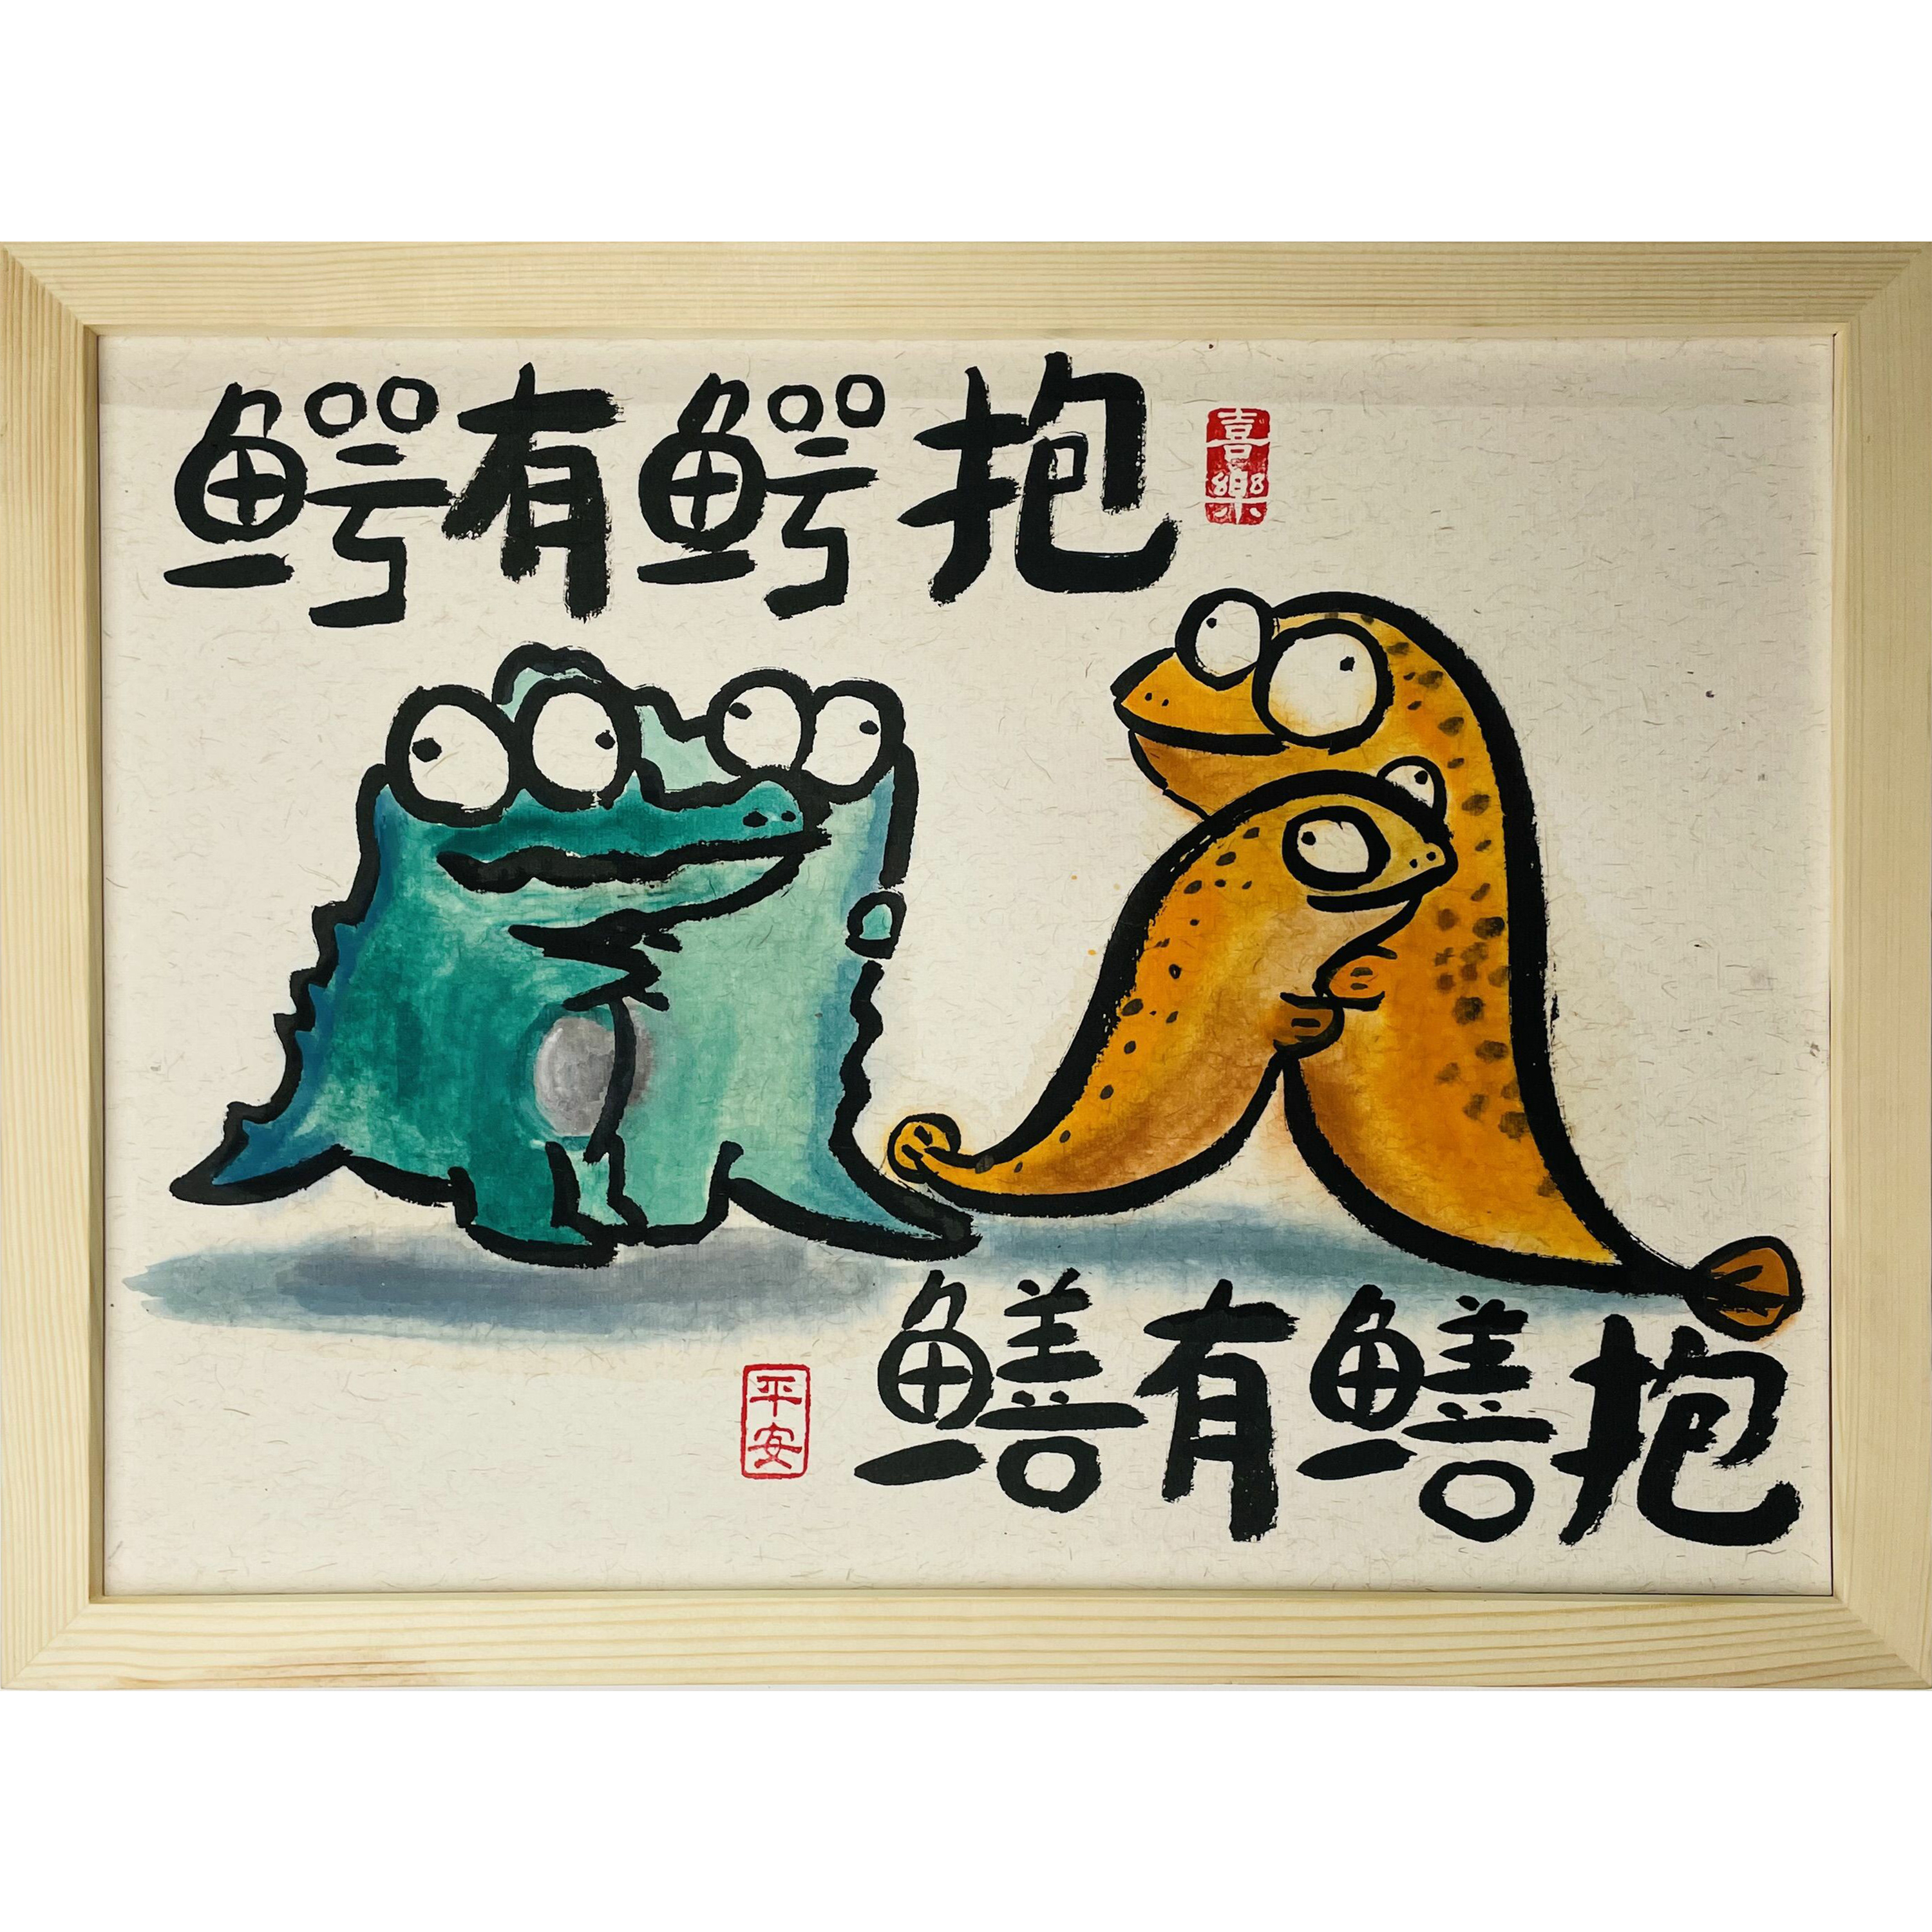 General 3000x3000 humor animals crocodiles frame